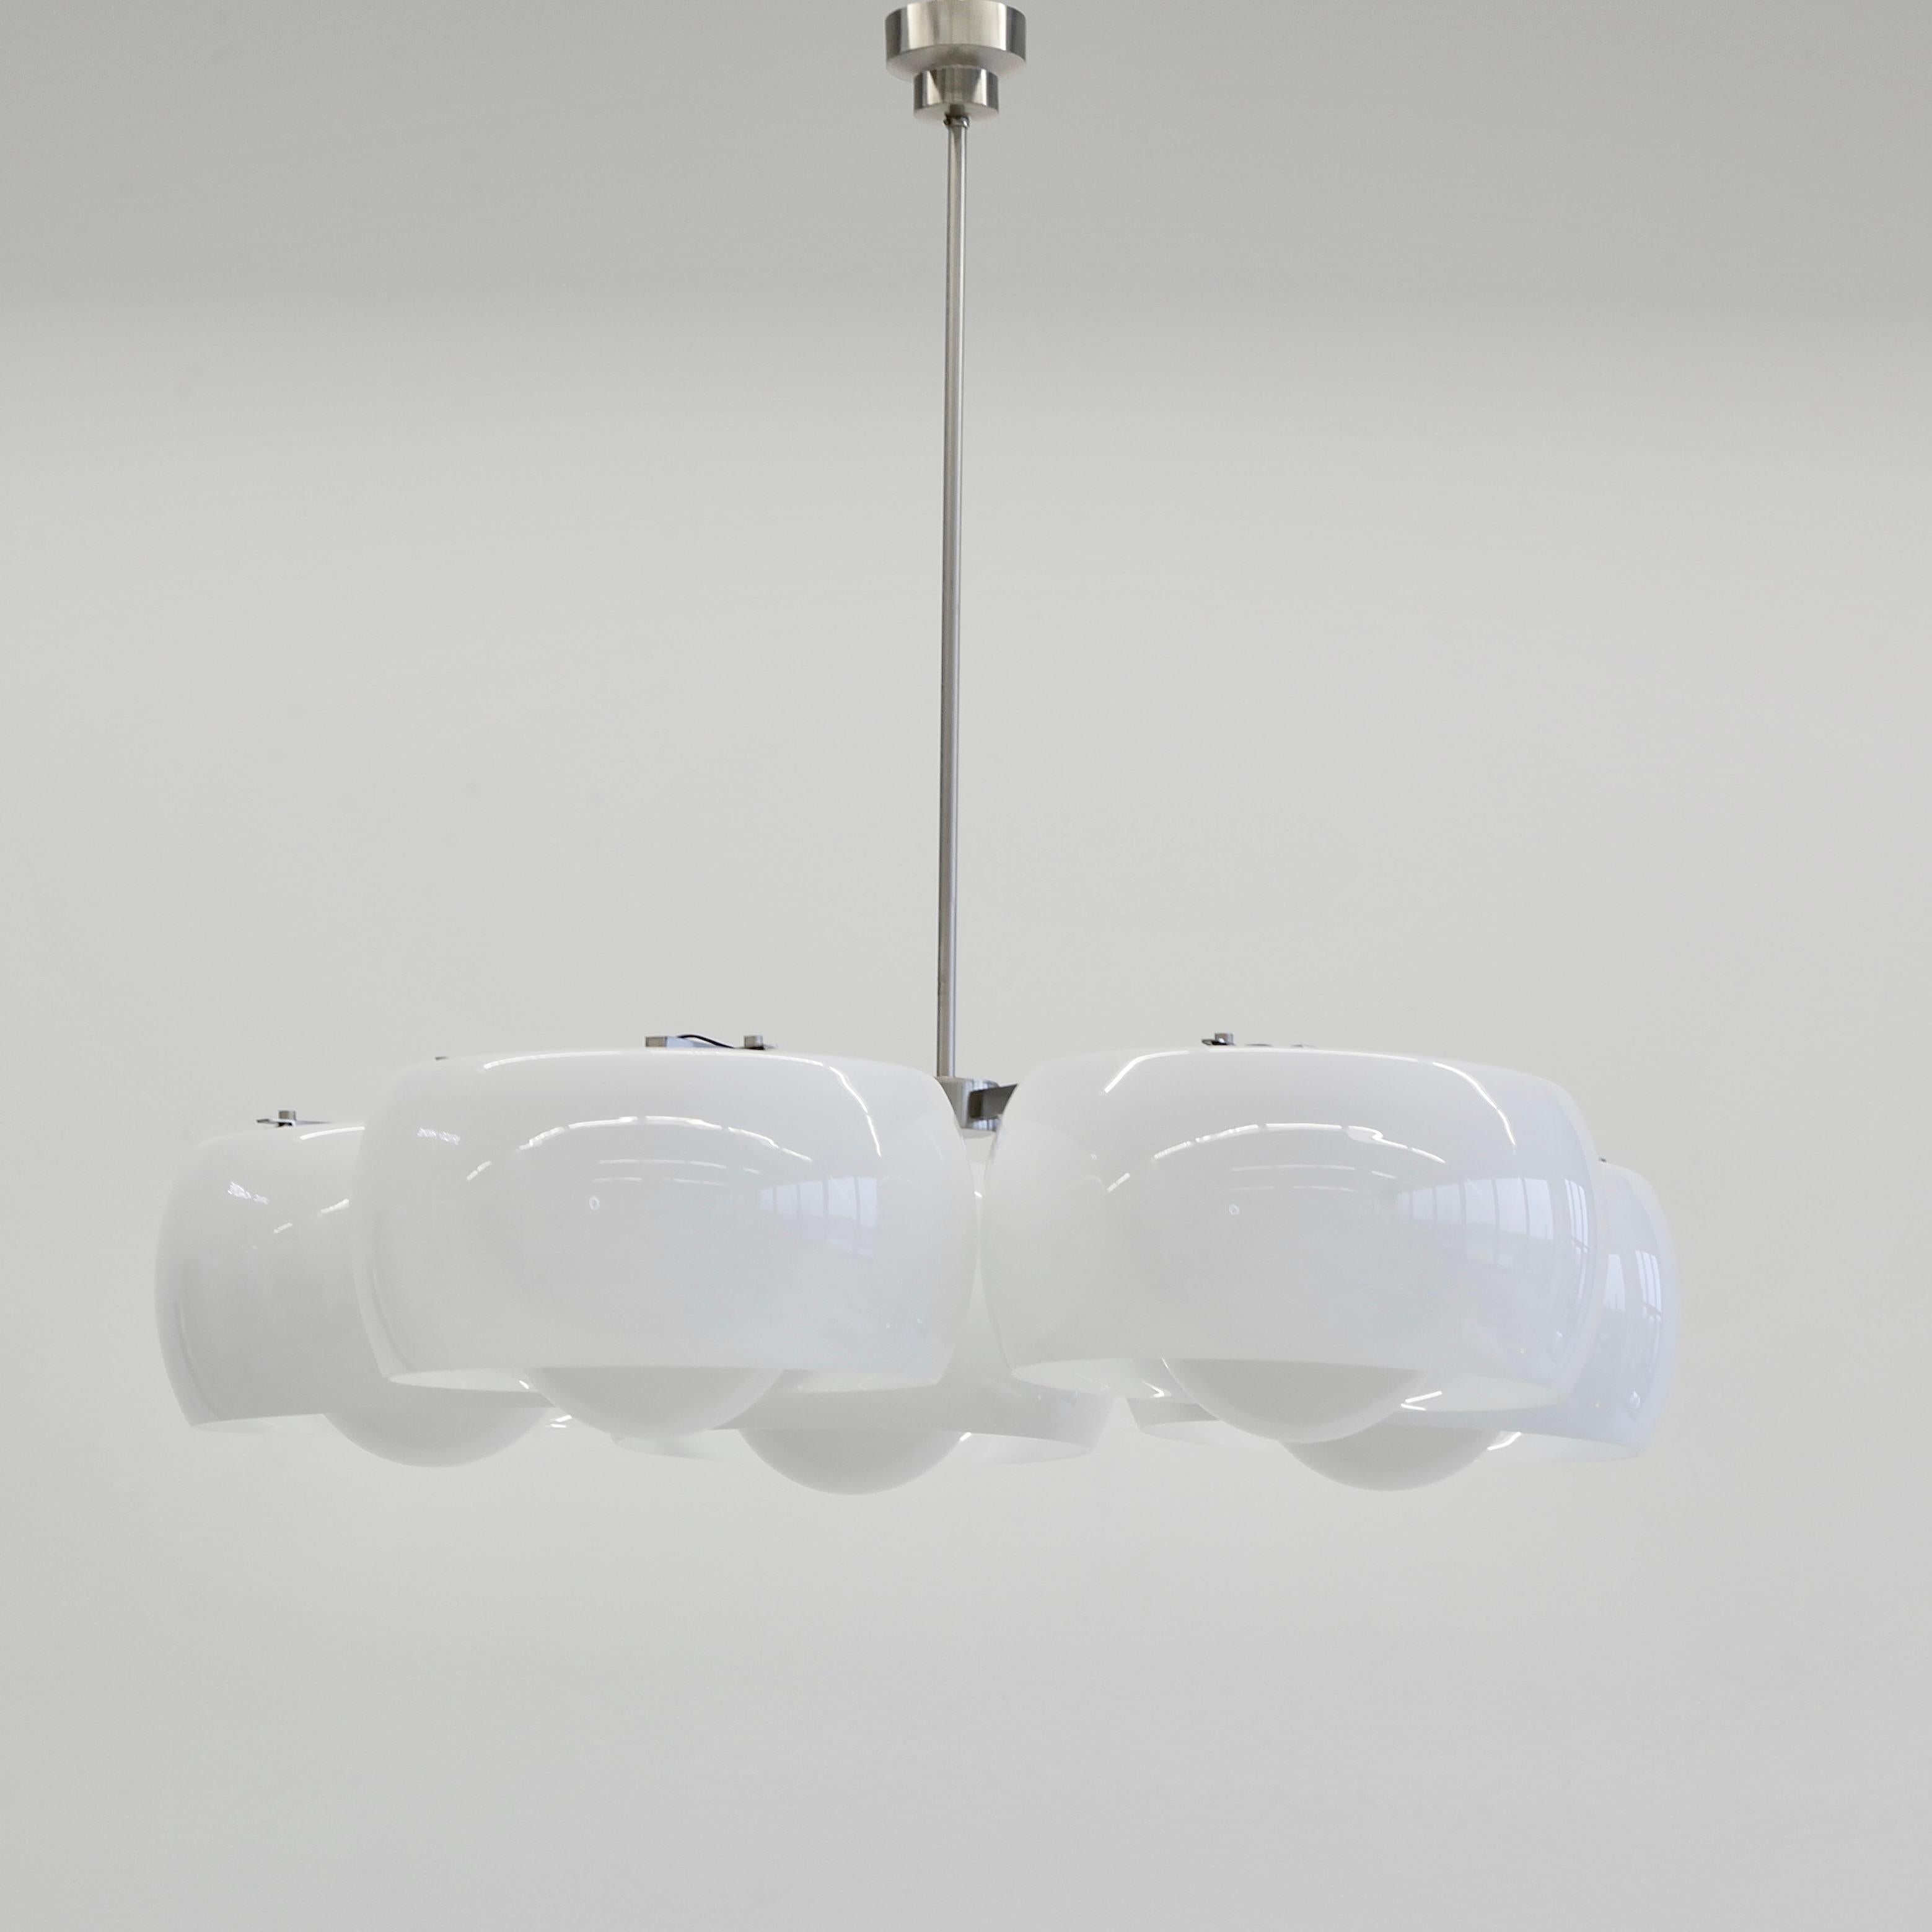 Italian Large Ceiling Lamp Pentaclinio Designed by Vico Magistretti for Artemide, 1961